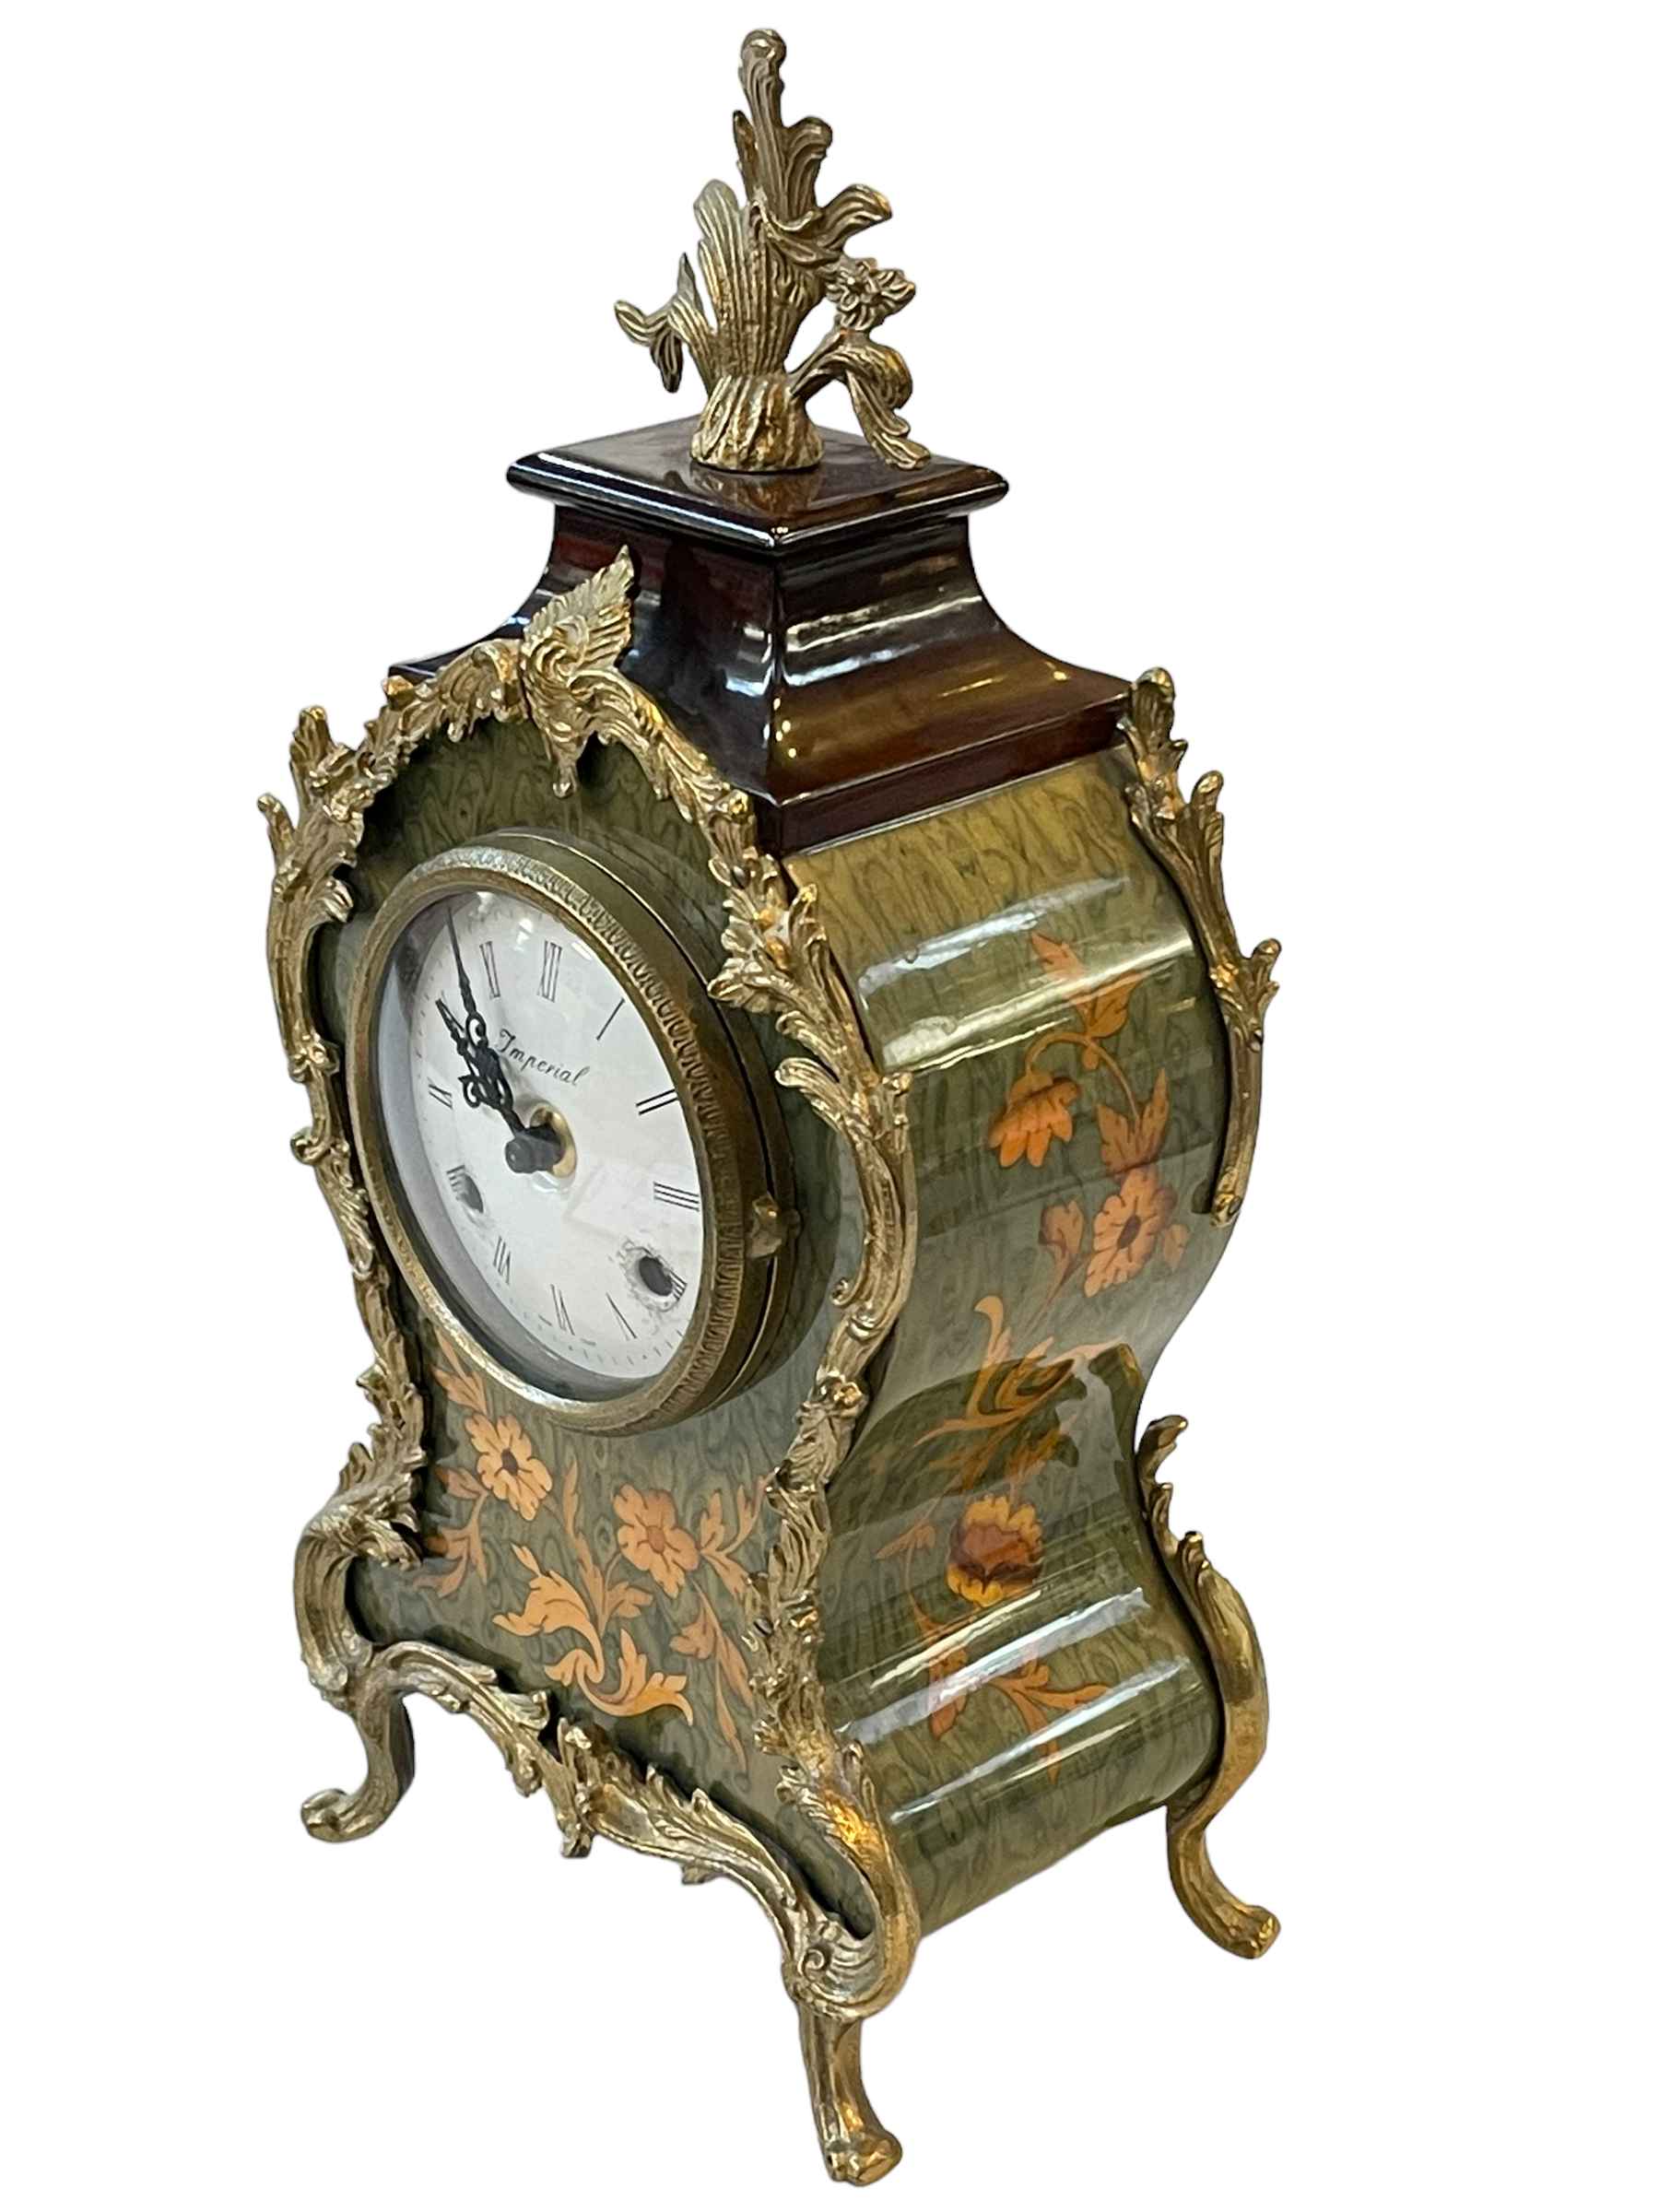 Italian ornate gilt mounted mantel clock with German striking movement, 37cm. - Image 3 of 3